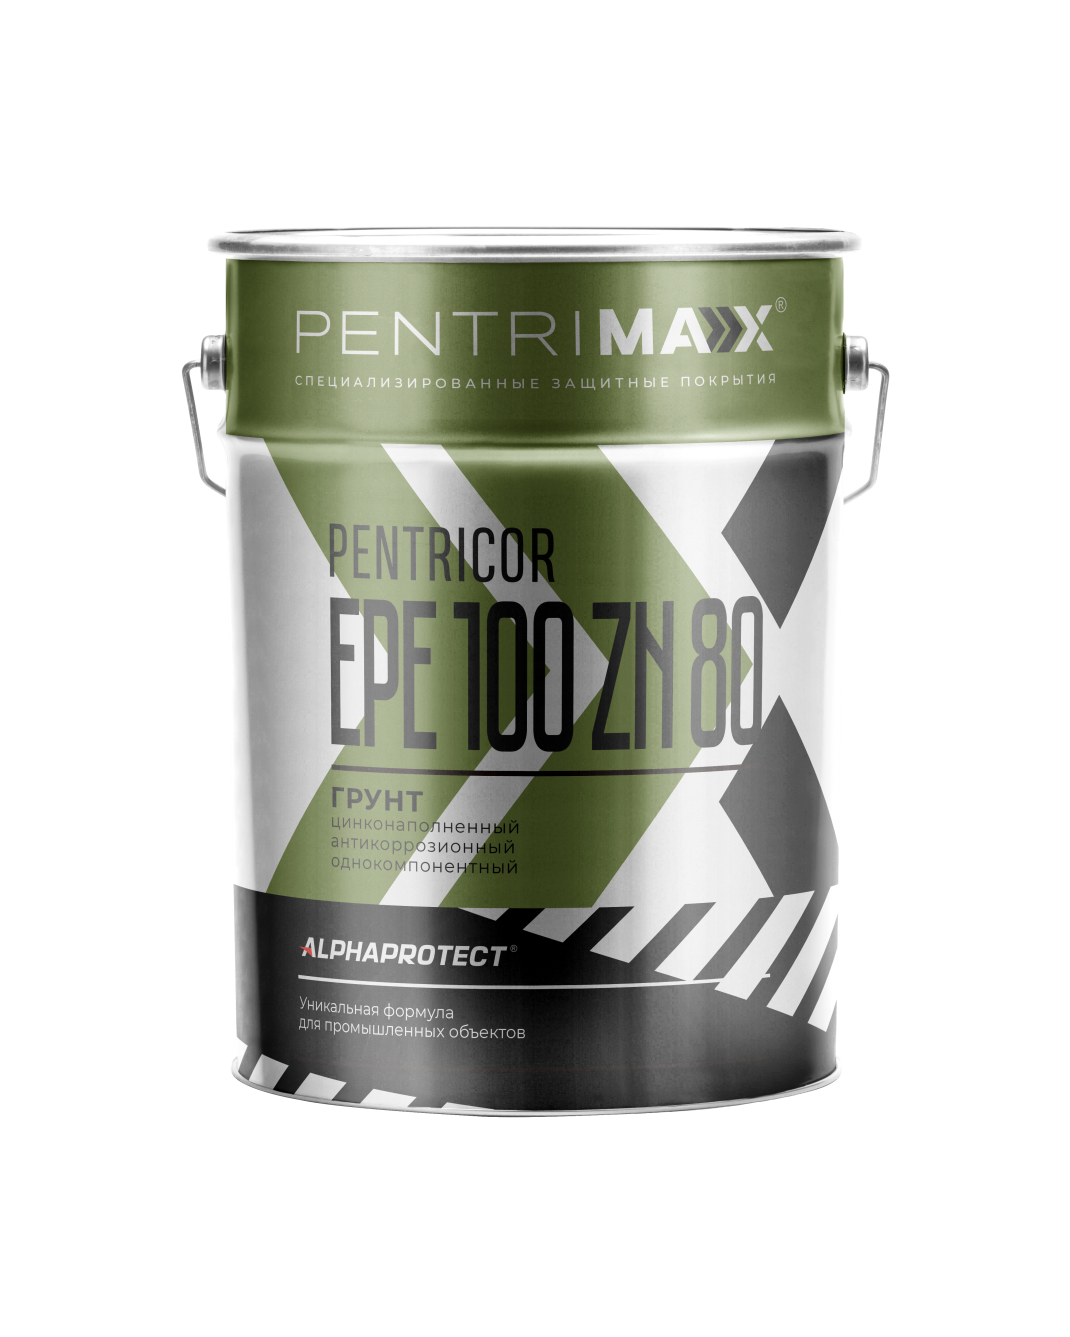 Эпоксидный грунт PENTRICOR EPE 100 Zn 80